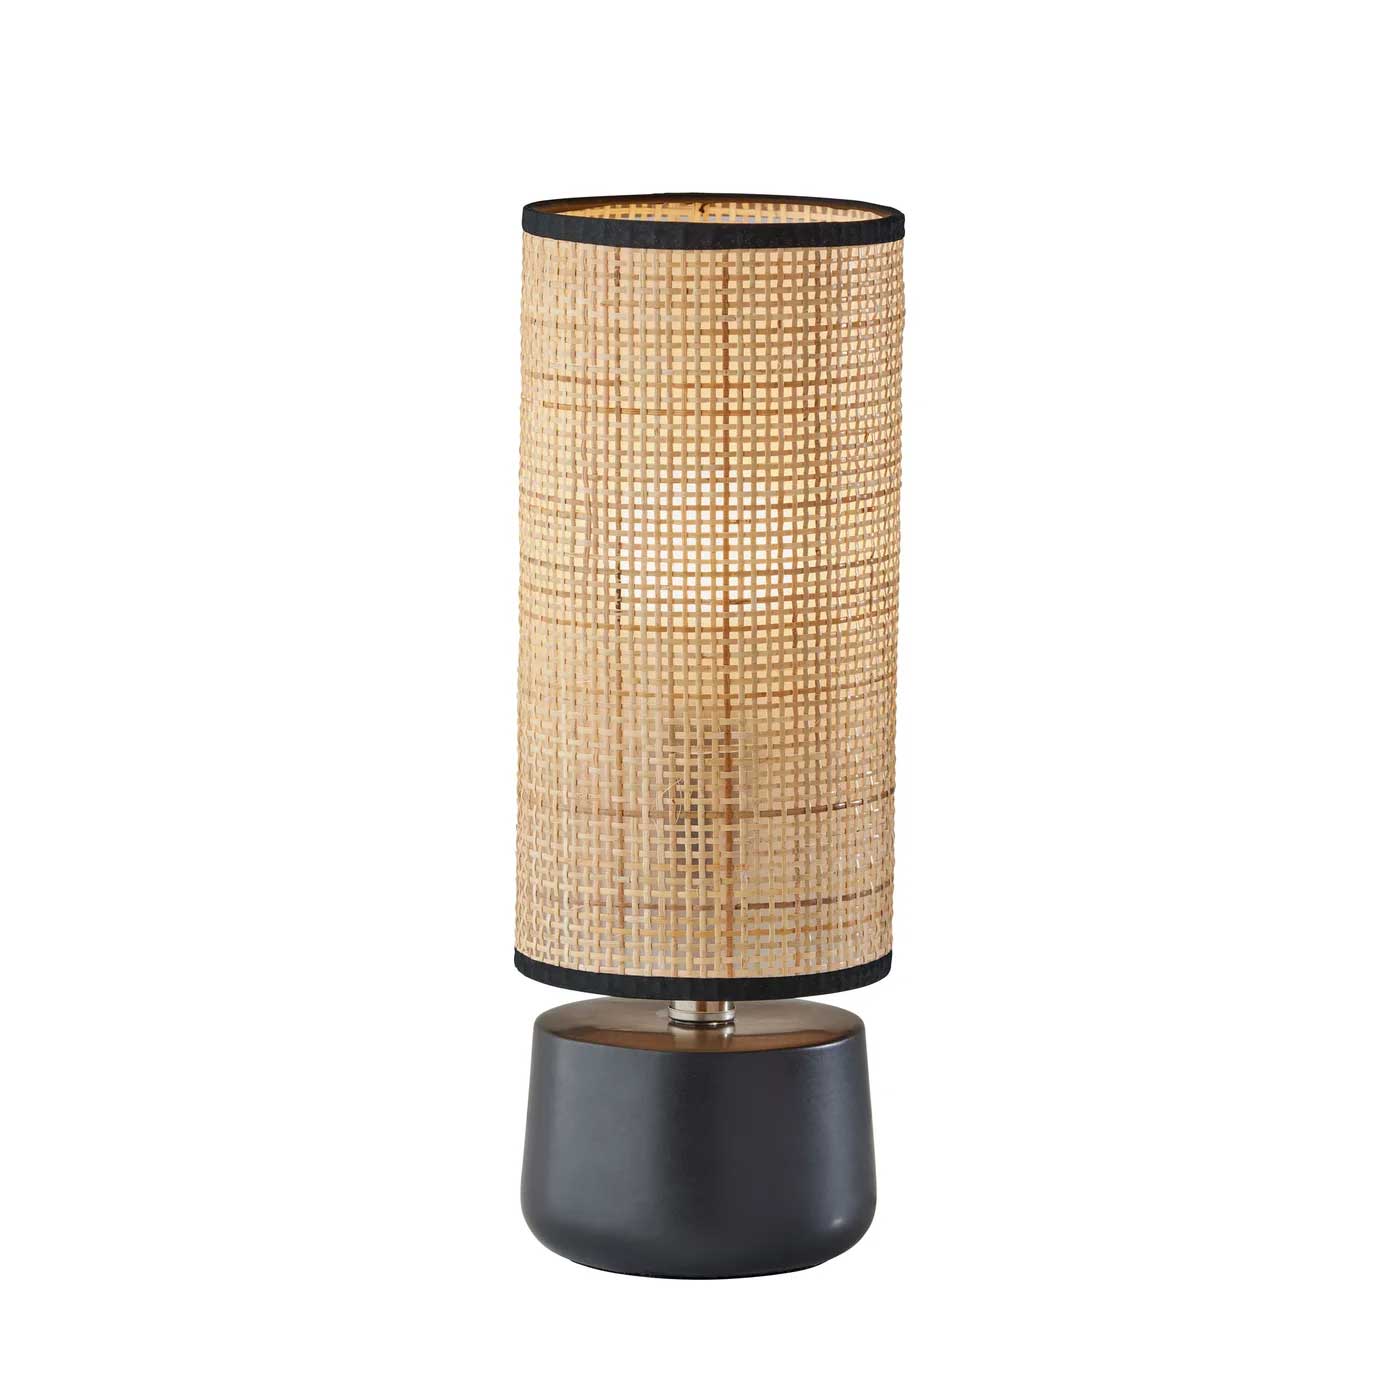 SHEFFIELD Table lamp Black - 3730-01 | ADESSO